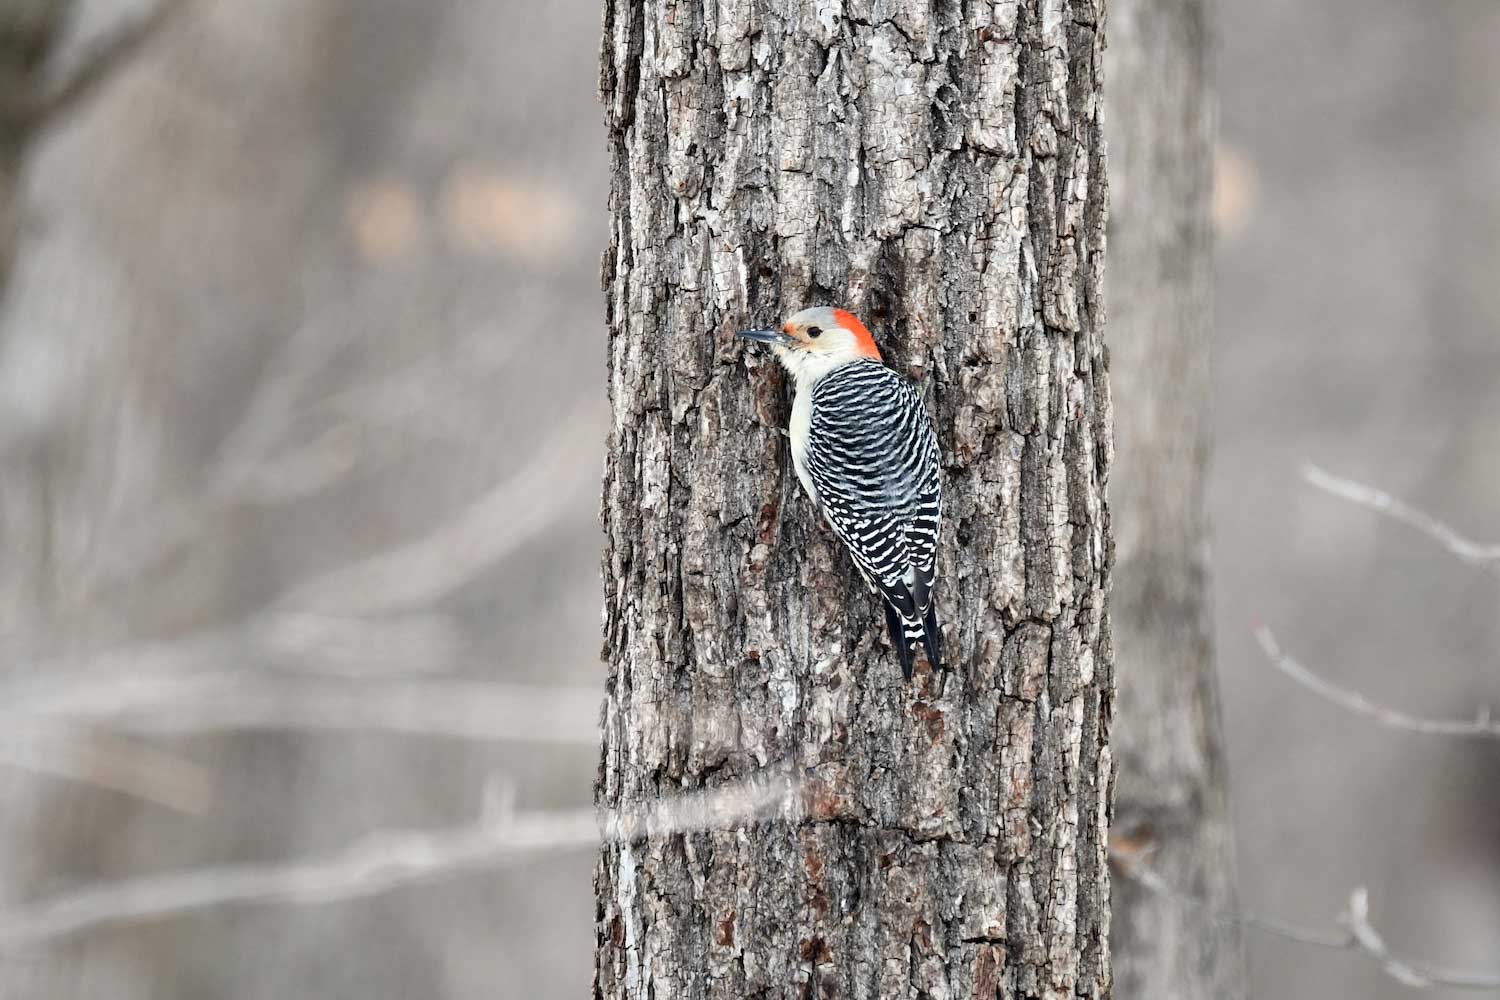 A red-bellied woodpecker on a tree trunk.